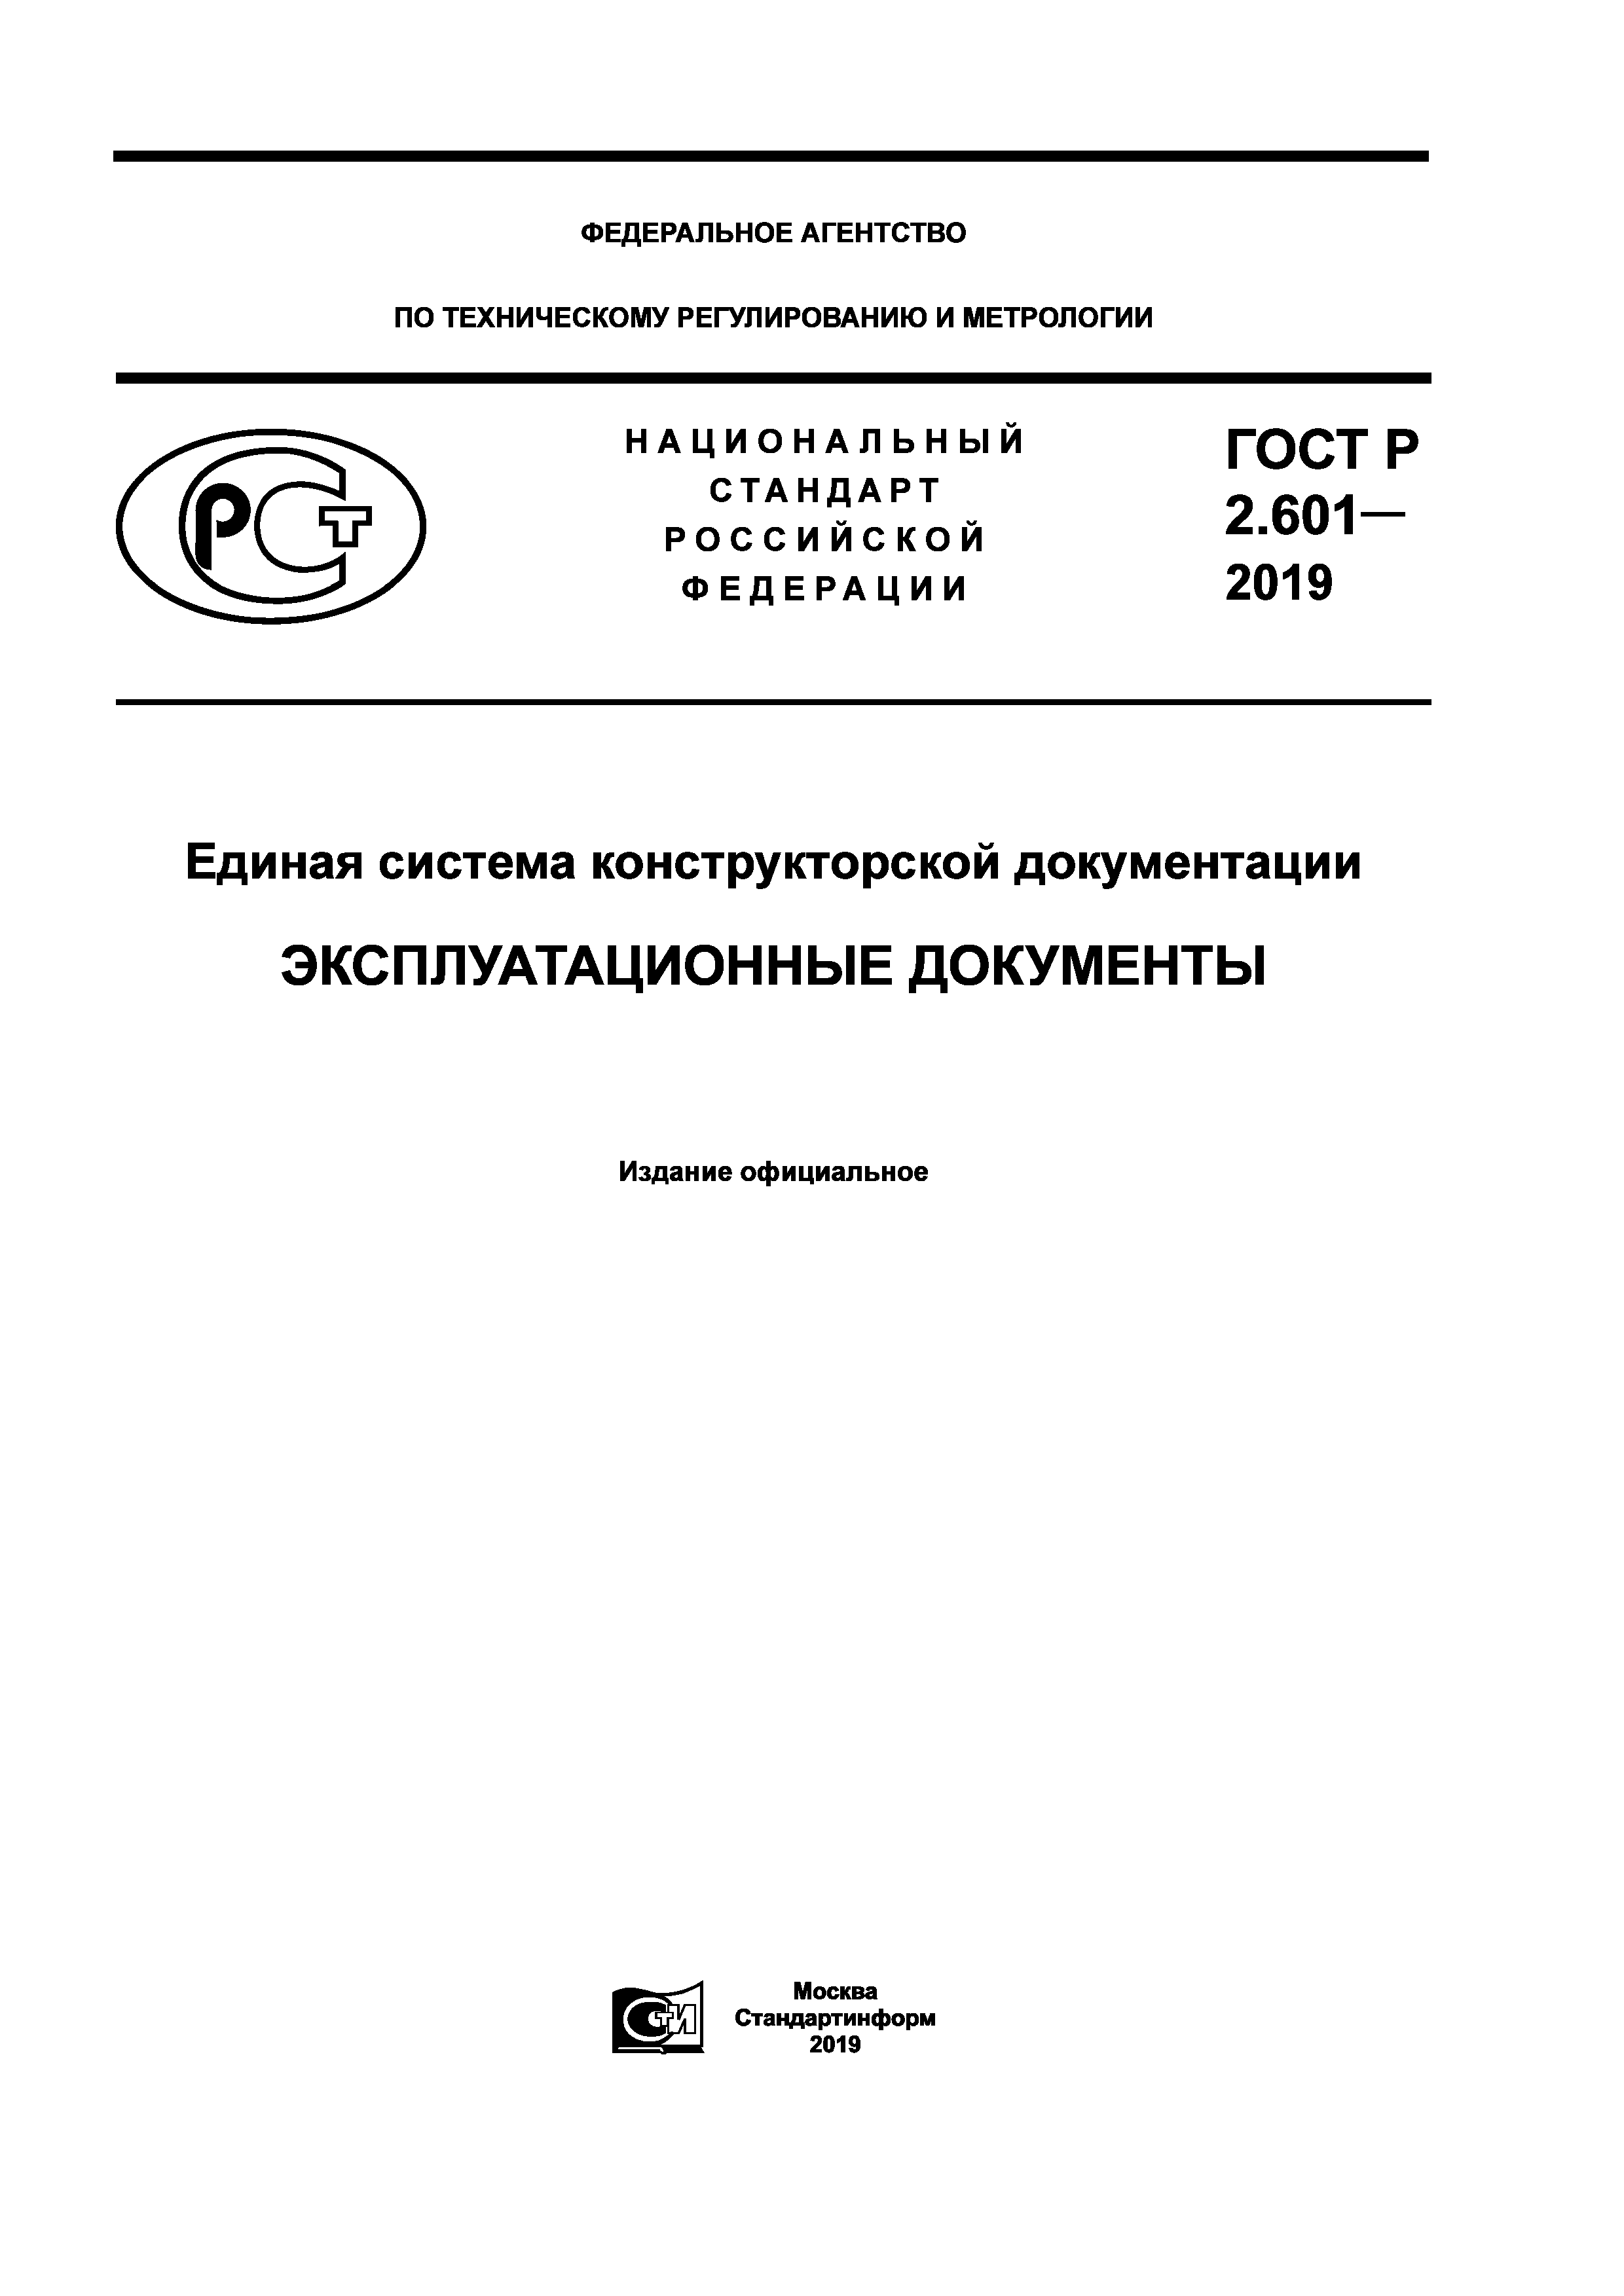 ГОСТ Р 2.601-2019